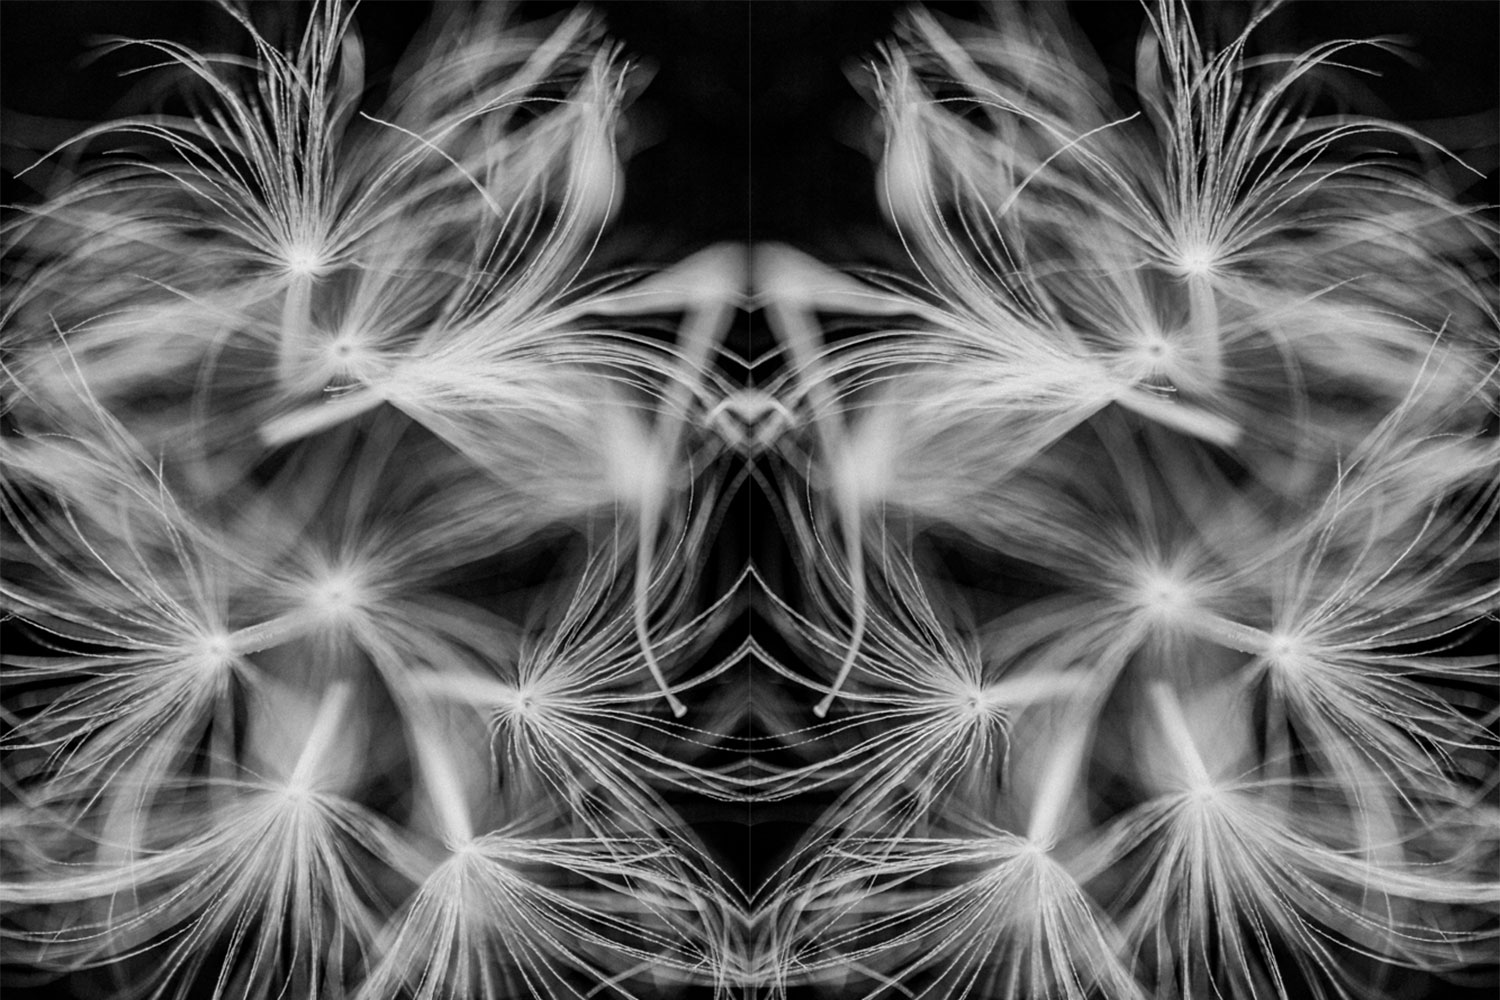 Pareidolia effect using a dandelion seed head black and white photo